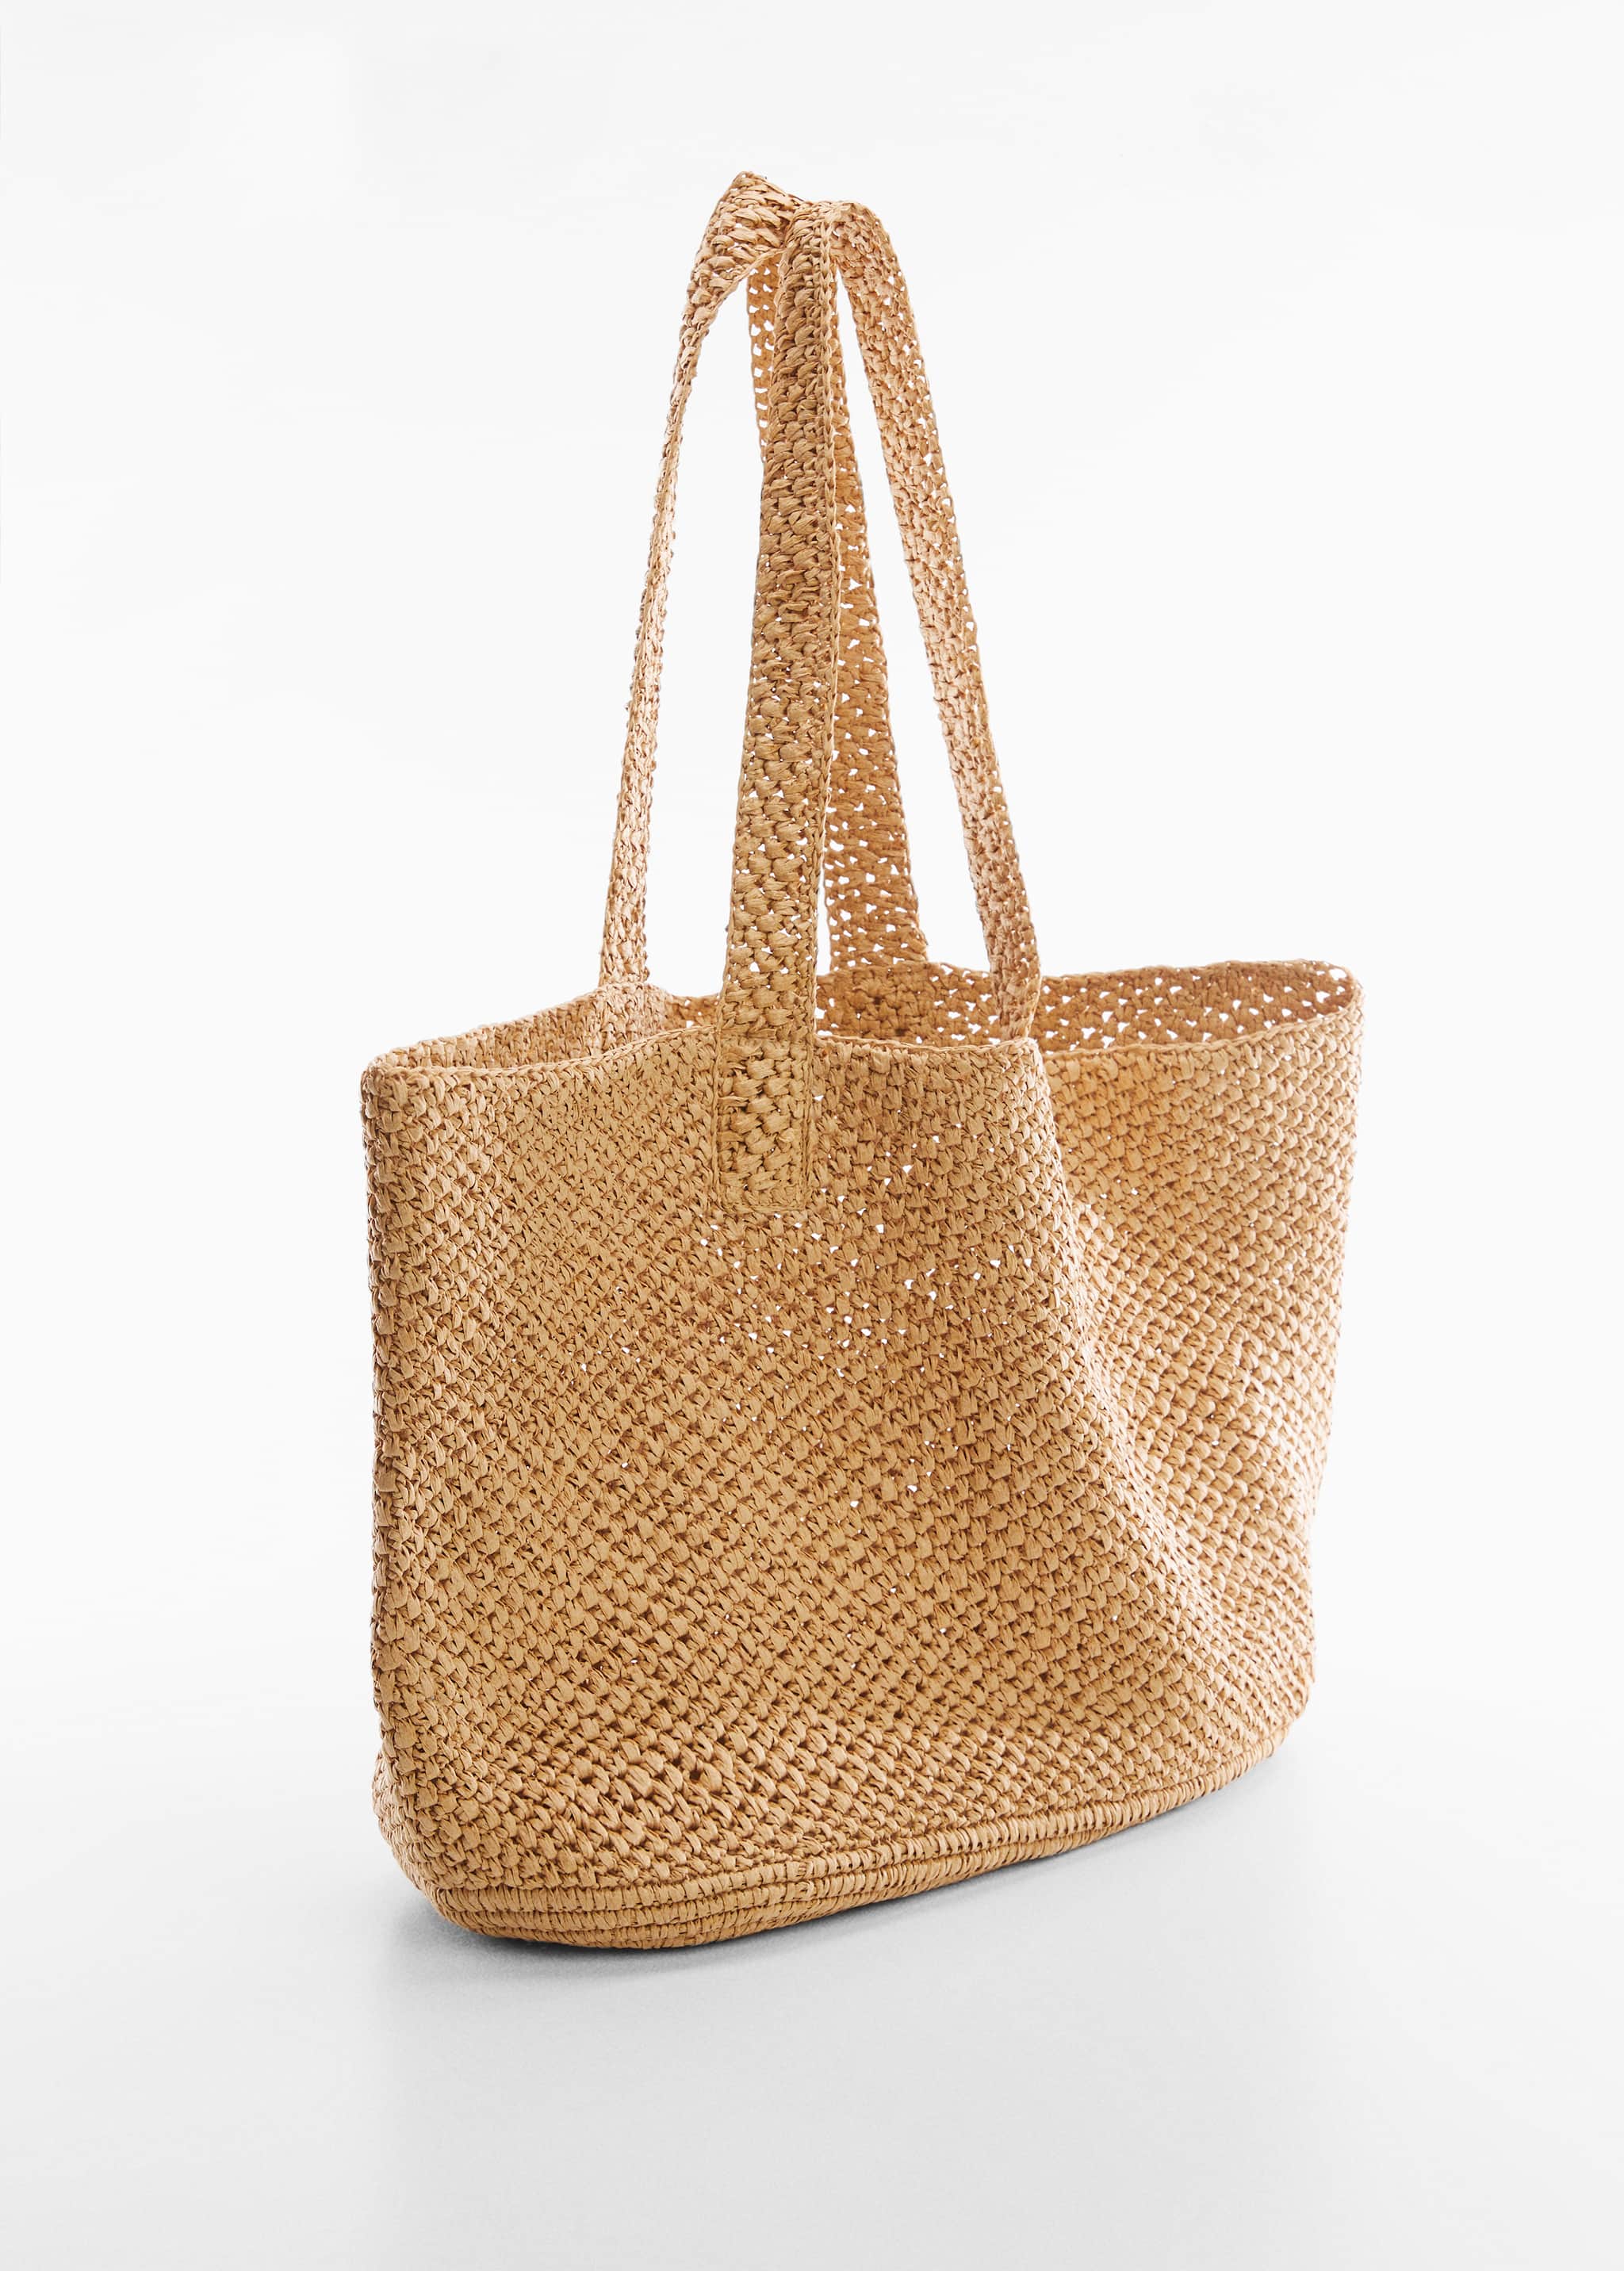 Shopper torba od prirodnih vlakana - Prikaz srednjeg dijela